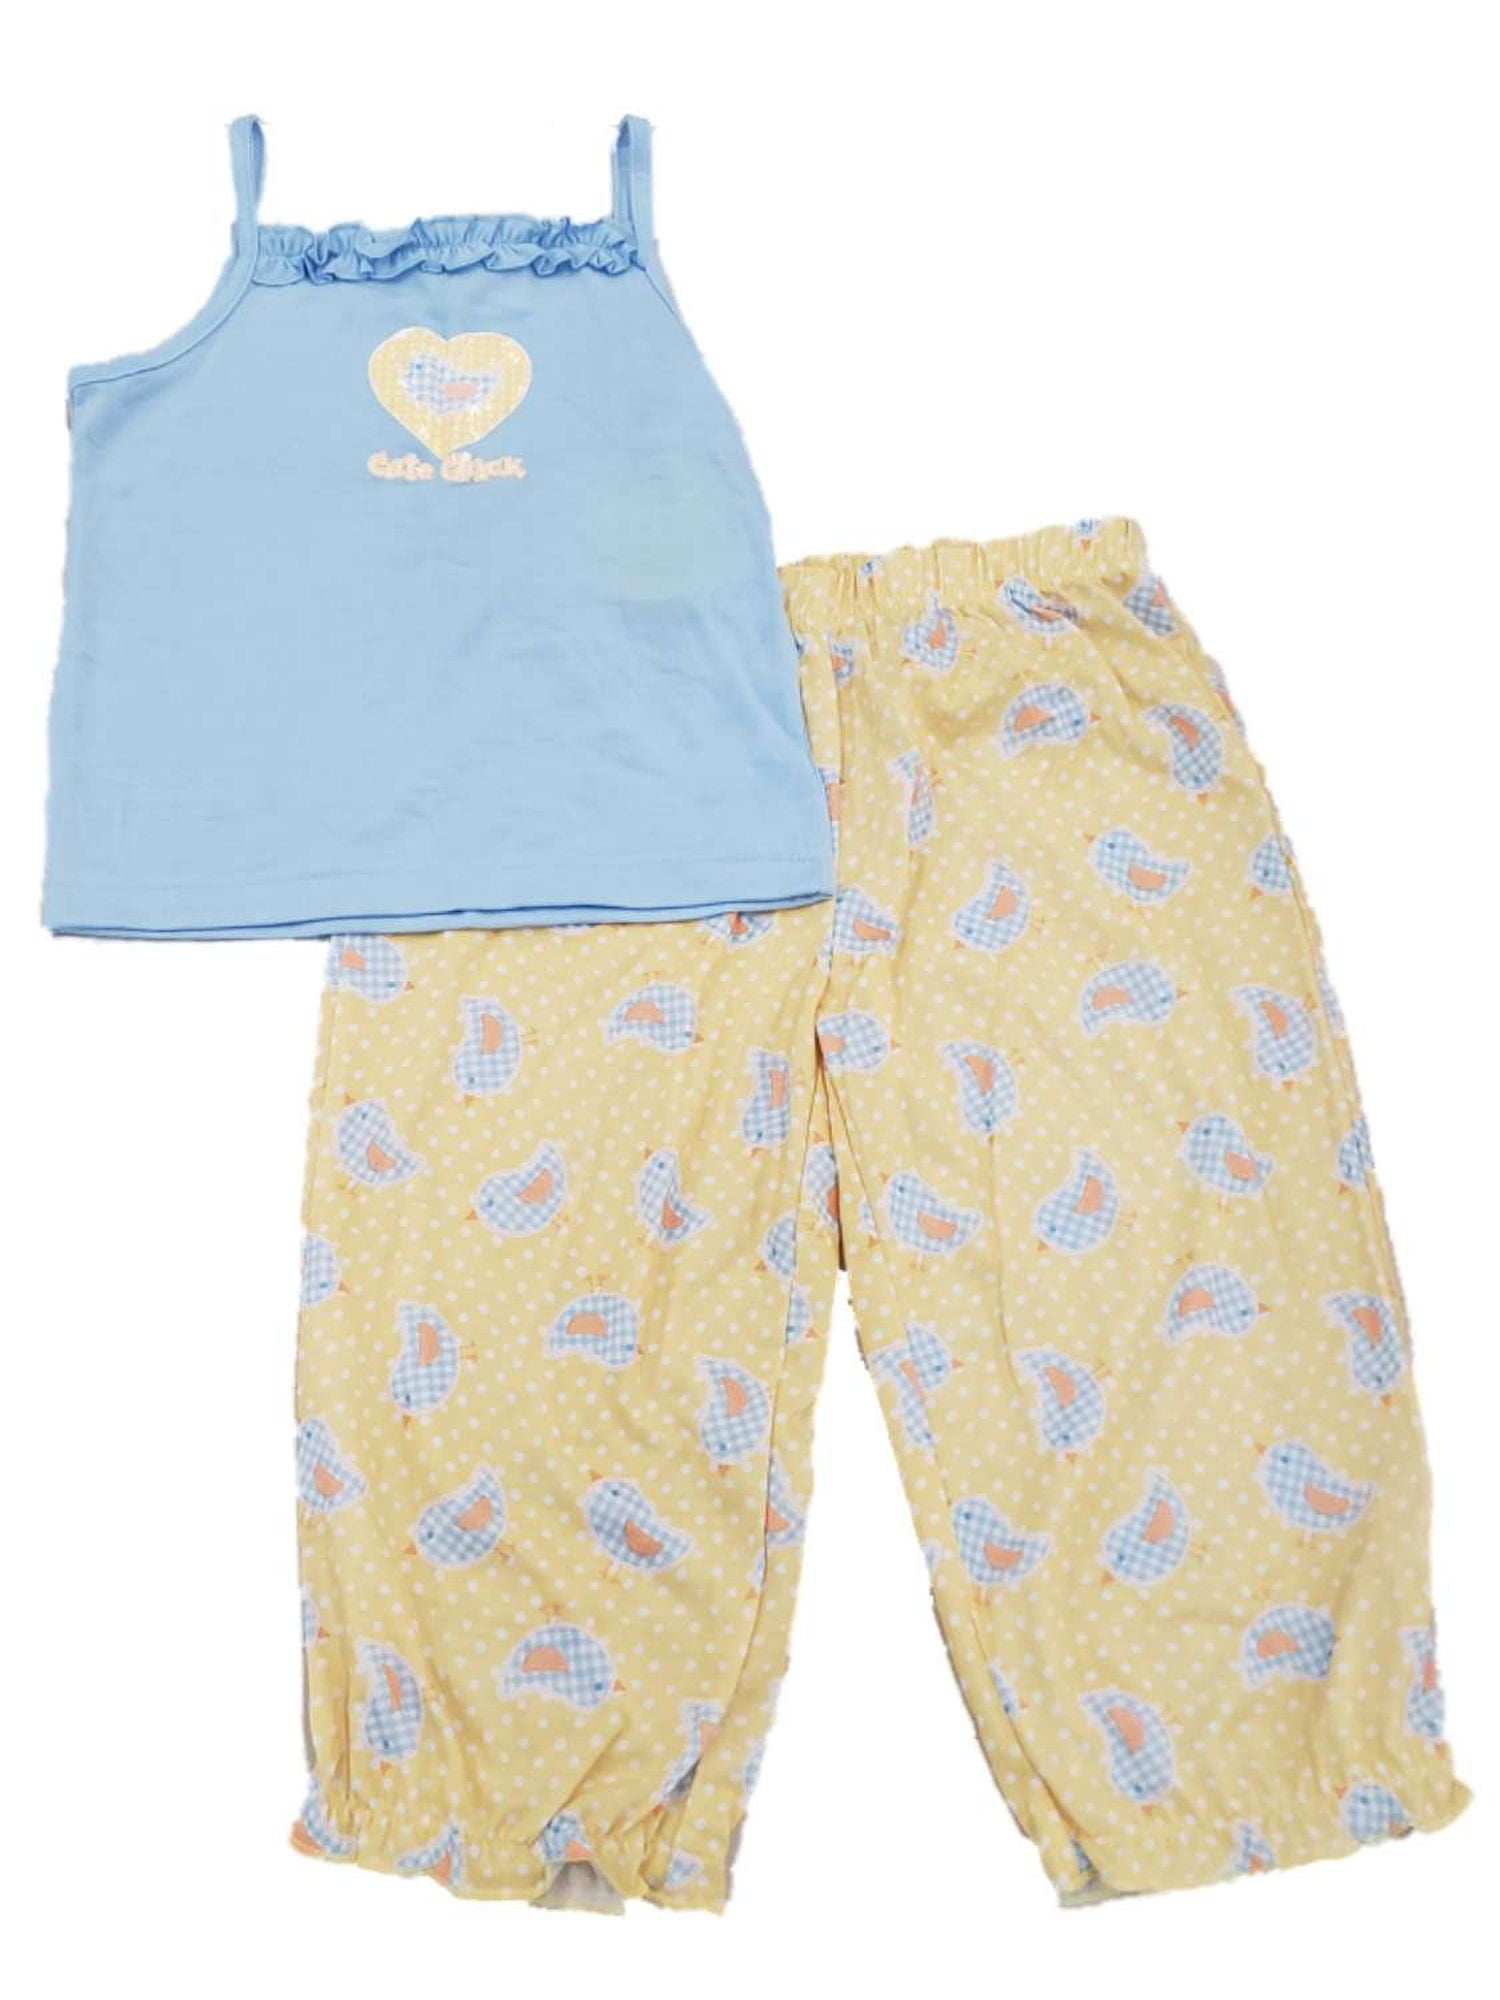 Boys Minecraft Pajamas Blue & Gray Charged Creeper Sleep Set Top & Pants